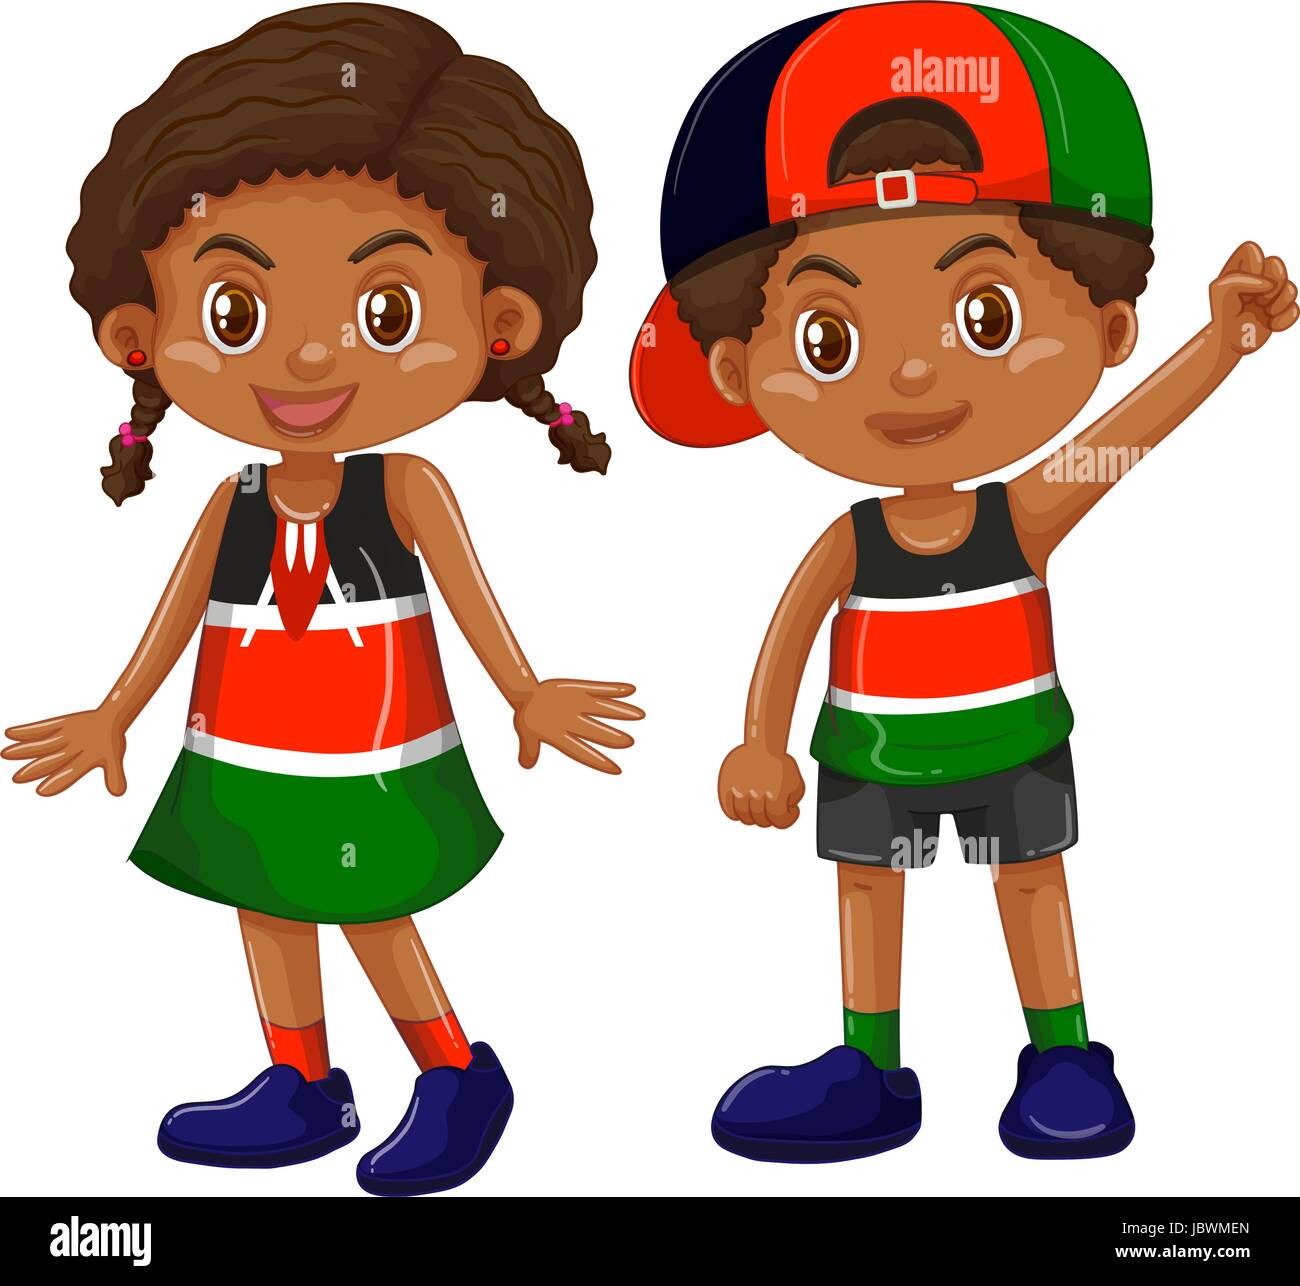 Girl and boy from Kenya illustration Stock Vector Image & Art - Alamy